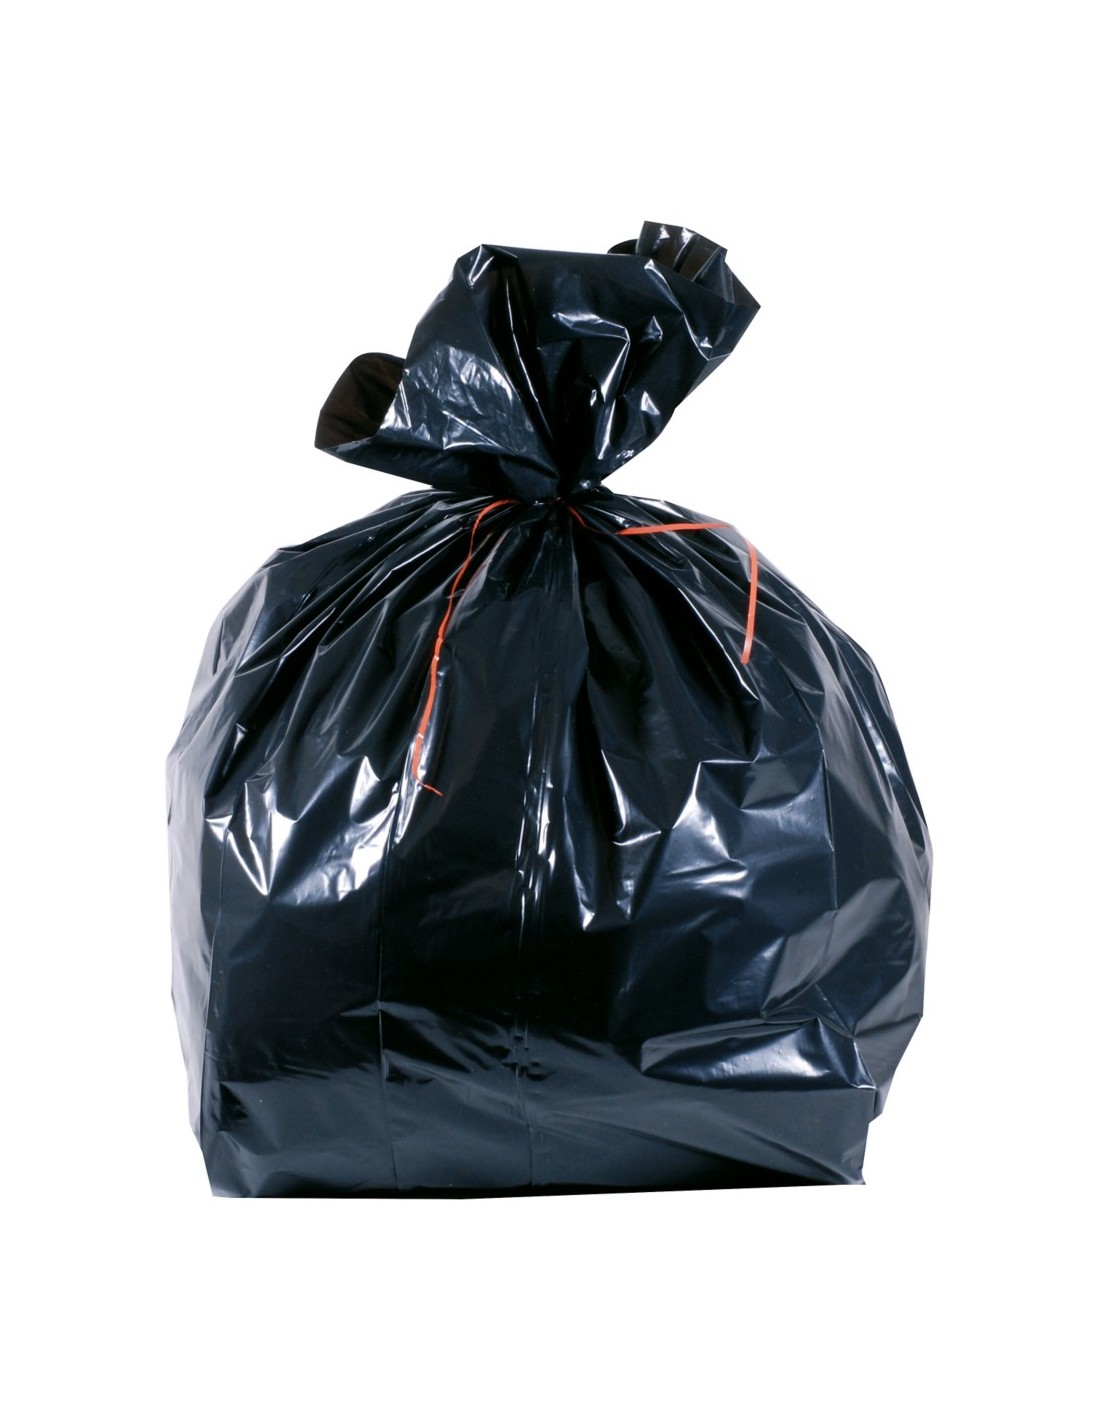 Sac poubelle standard - Hygiène et entretien - King-emballage